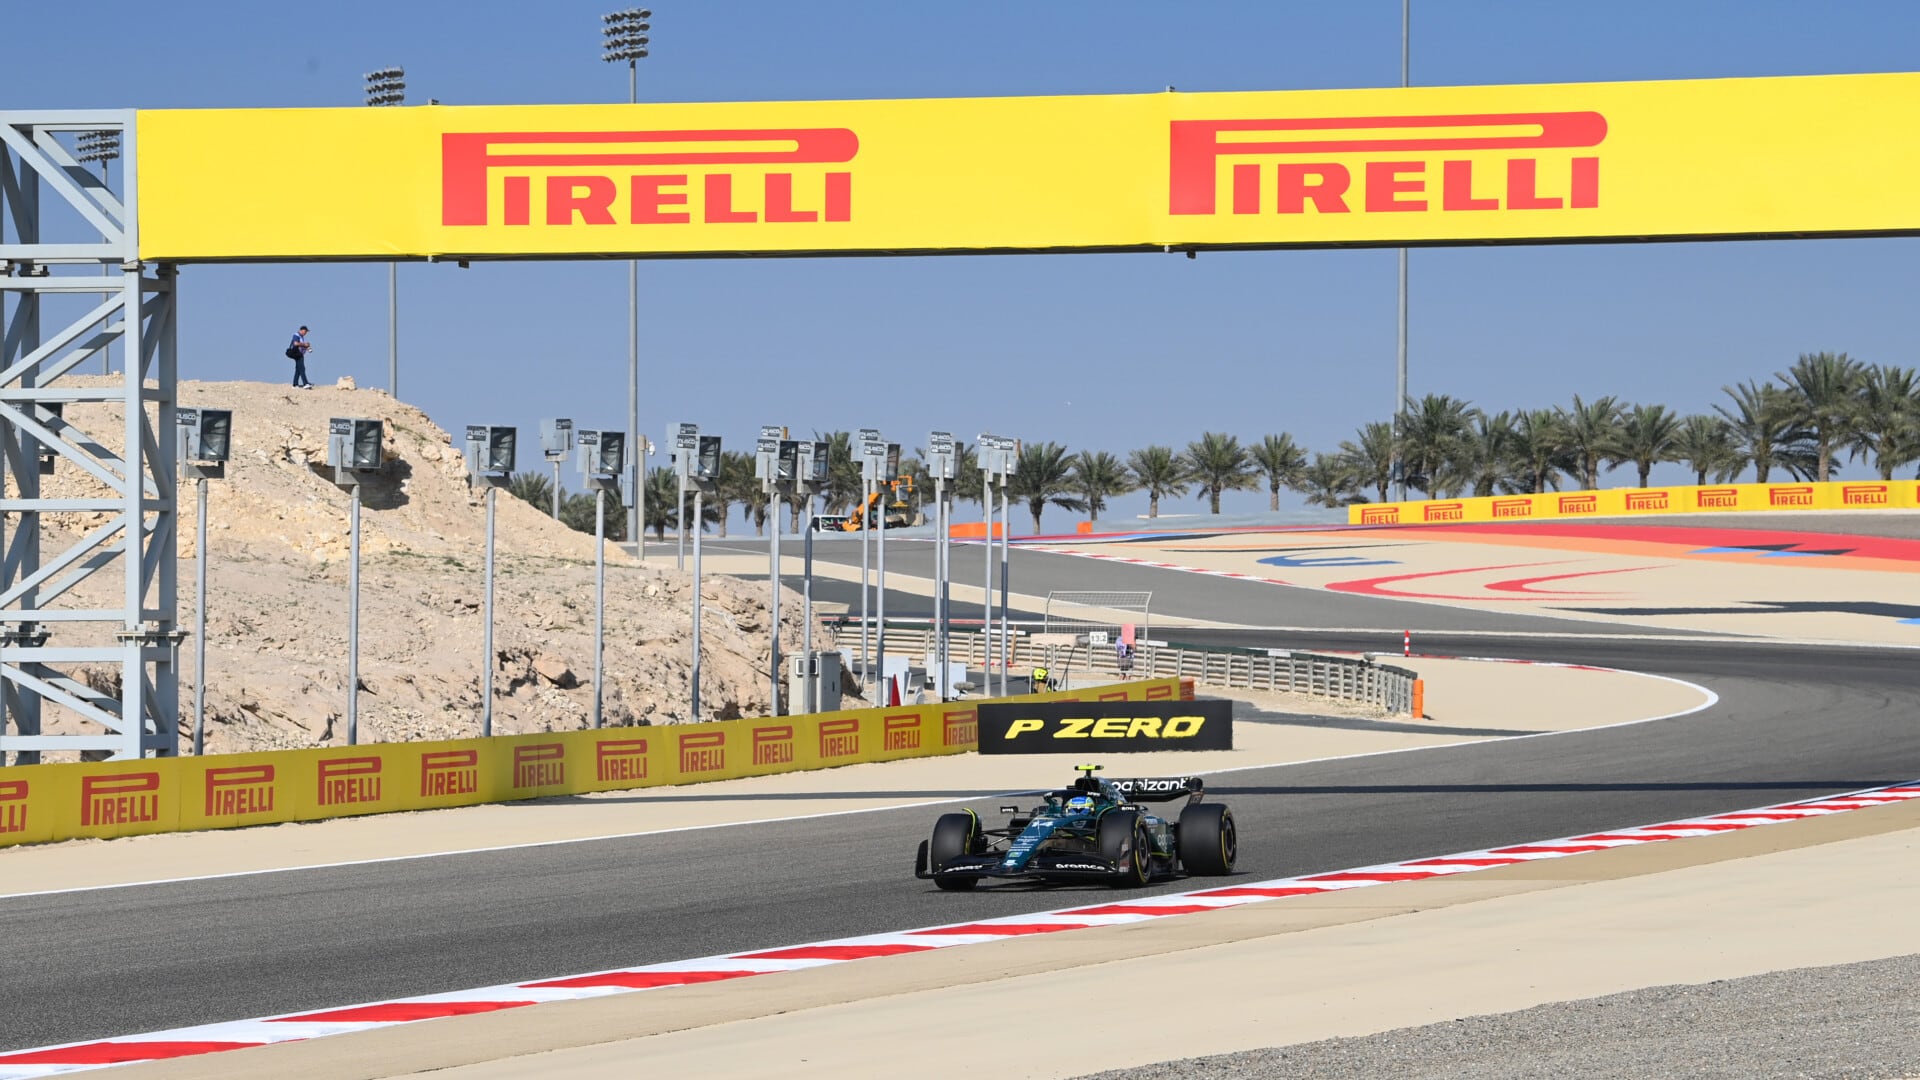 2023 Bahrain Grand Prix: Friday Tyre Analysis